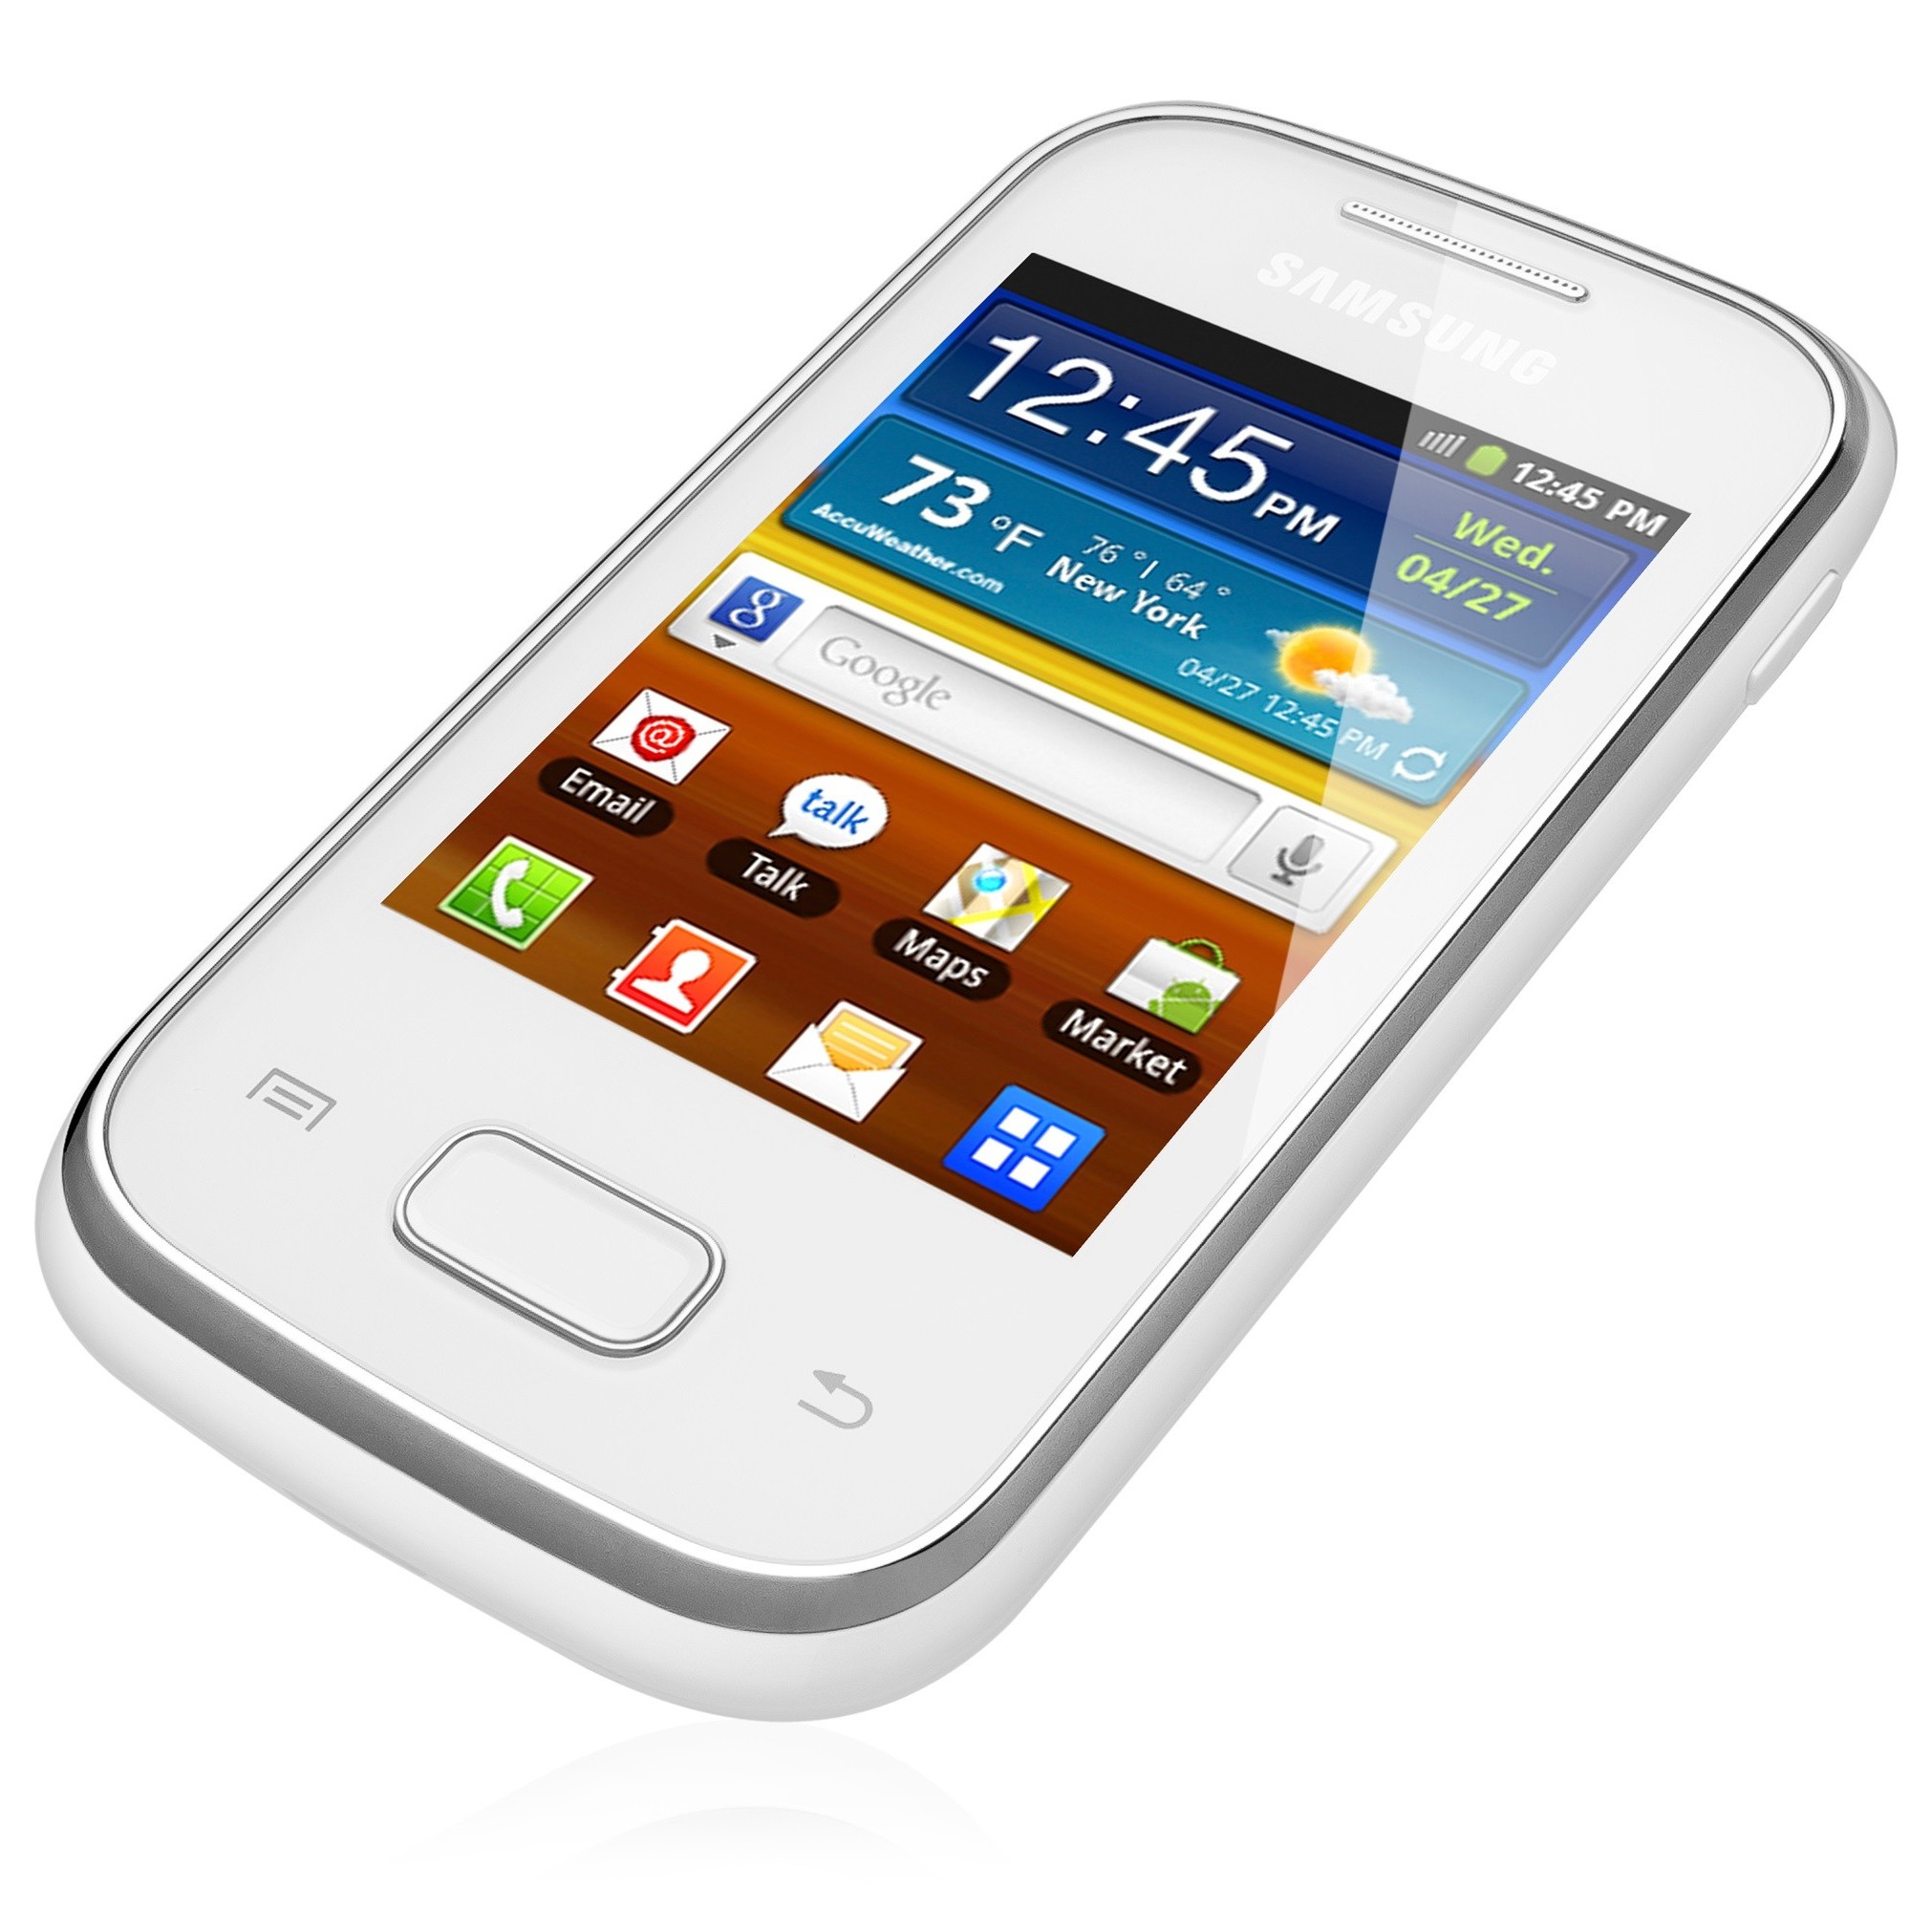 Samsung s5300 Galaxy Pocket. Samsung Galaxy Pocket 2. Самсунг маленький. Самый маленький Samsung.